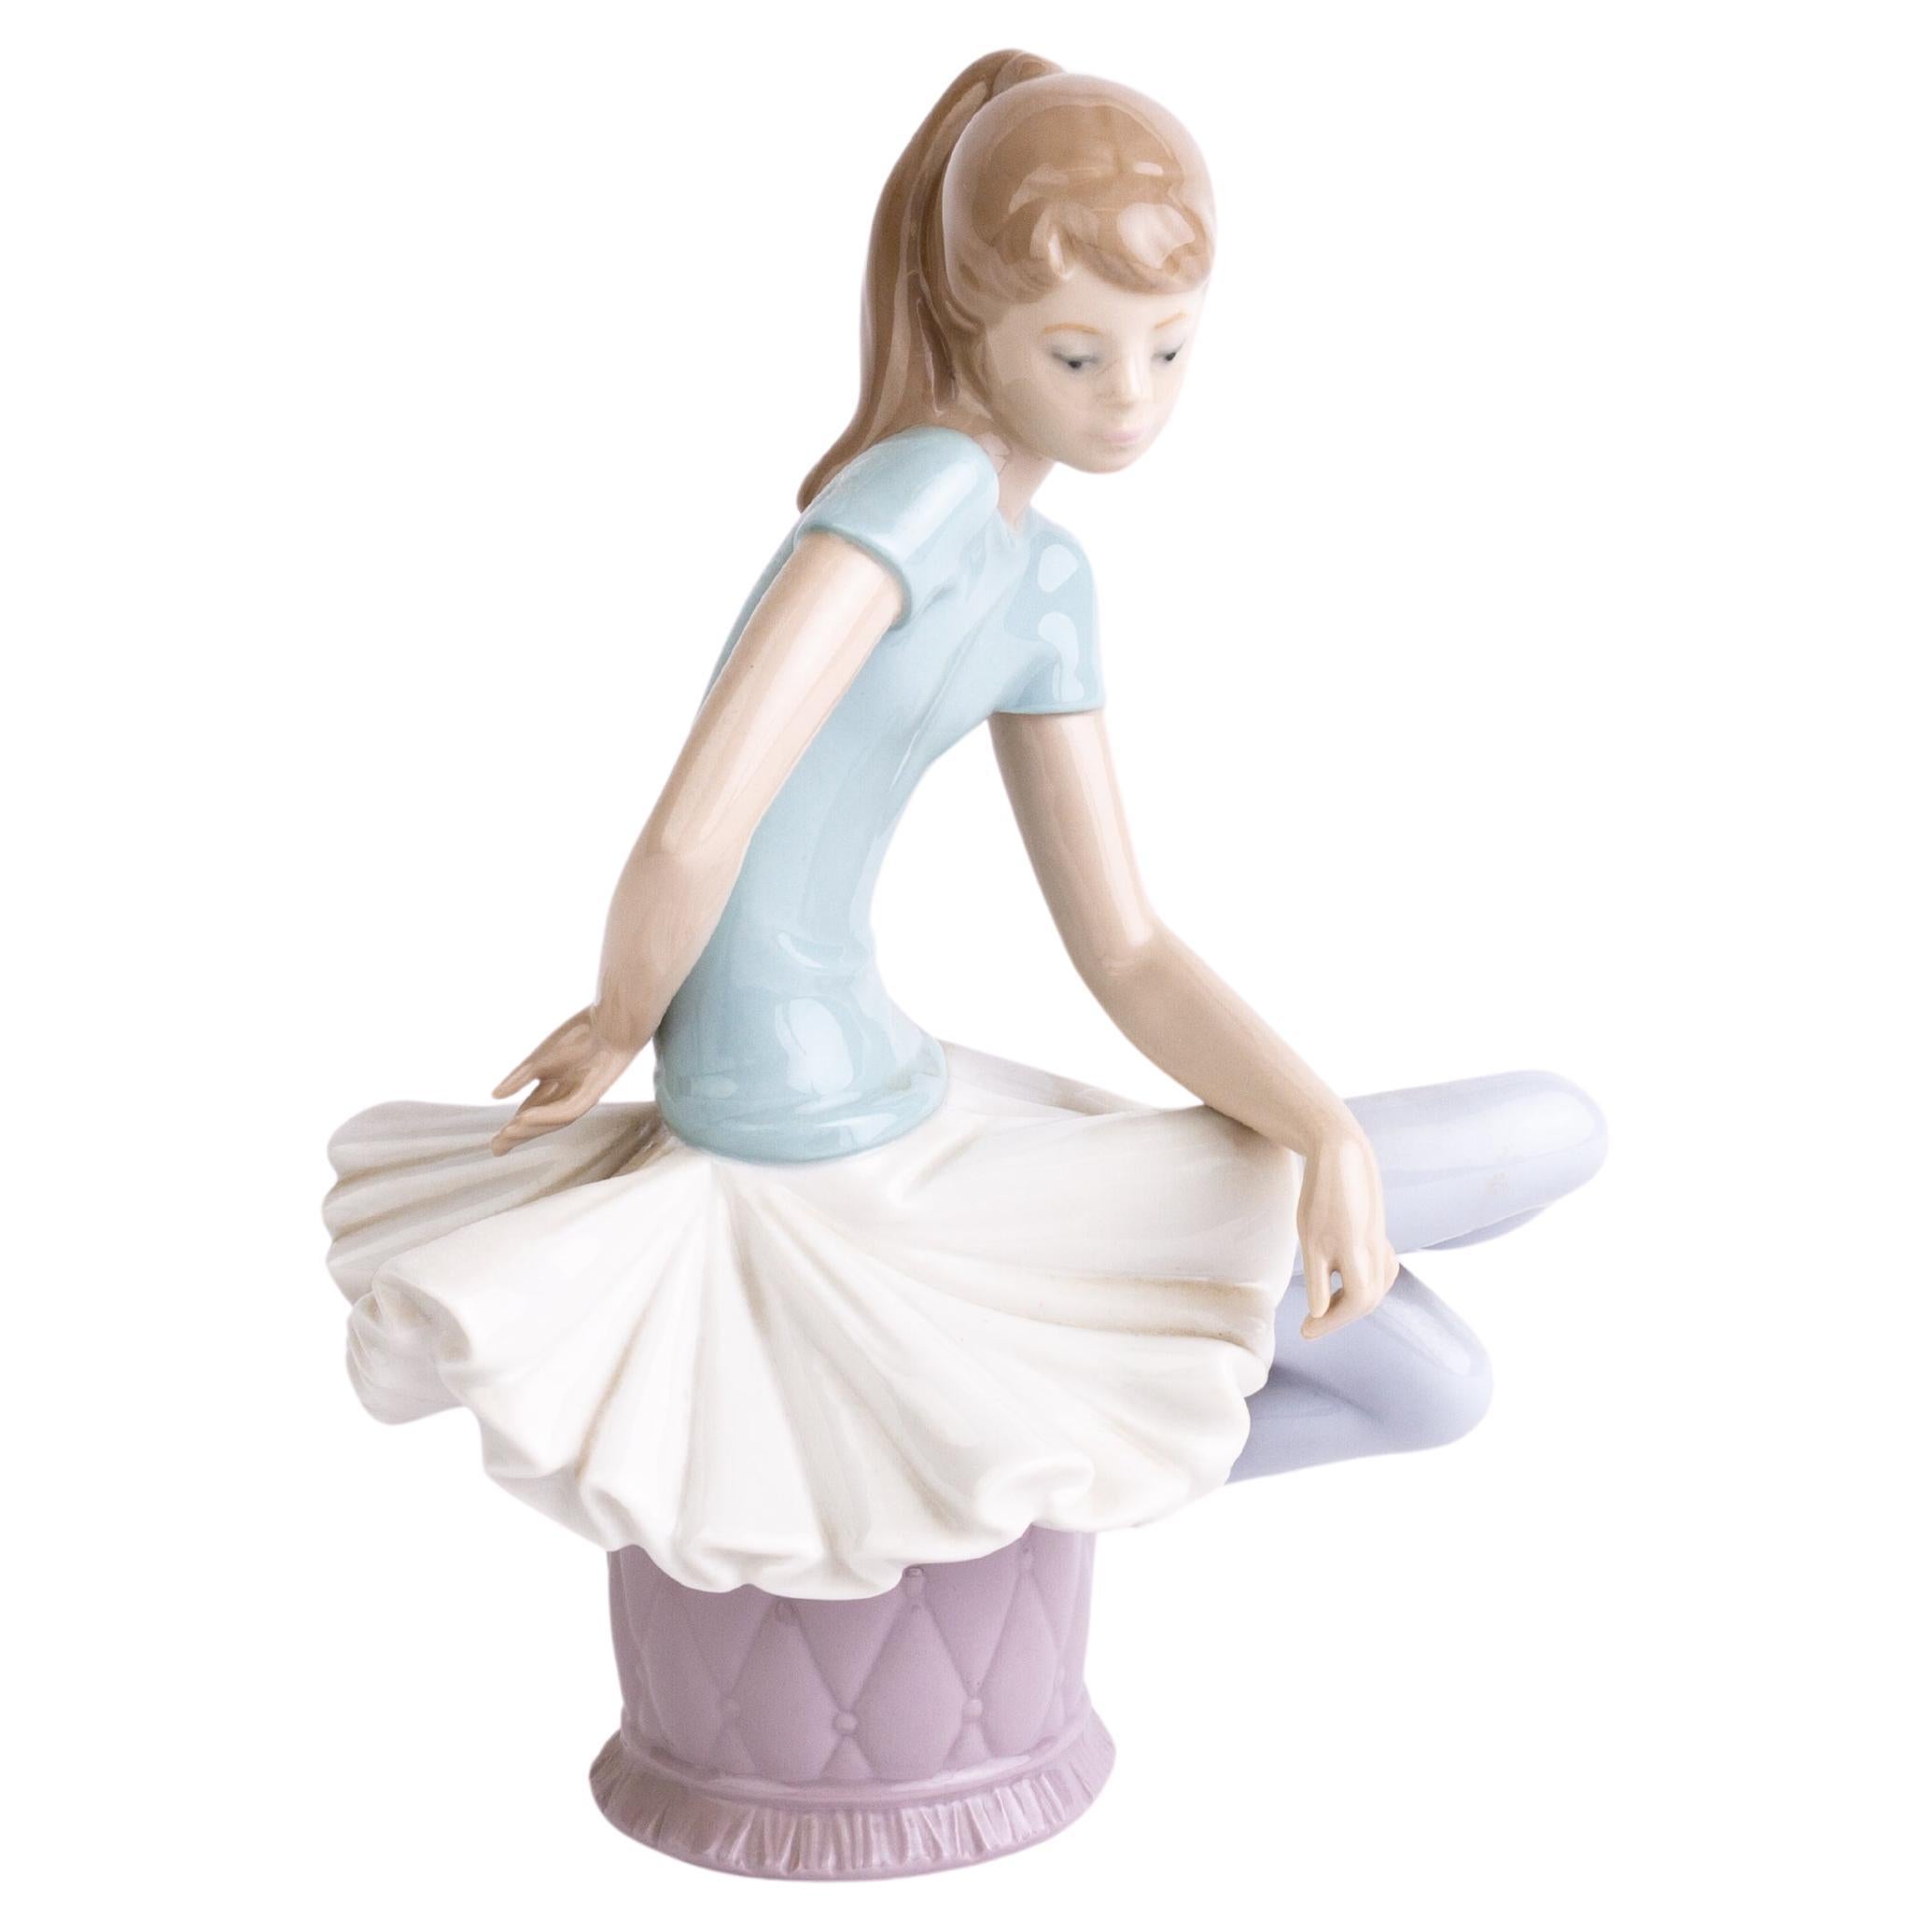 Spanish Fine Porcelain Lladro Ballerina Sculpture Figure 